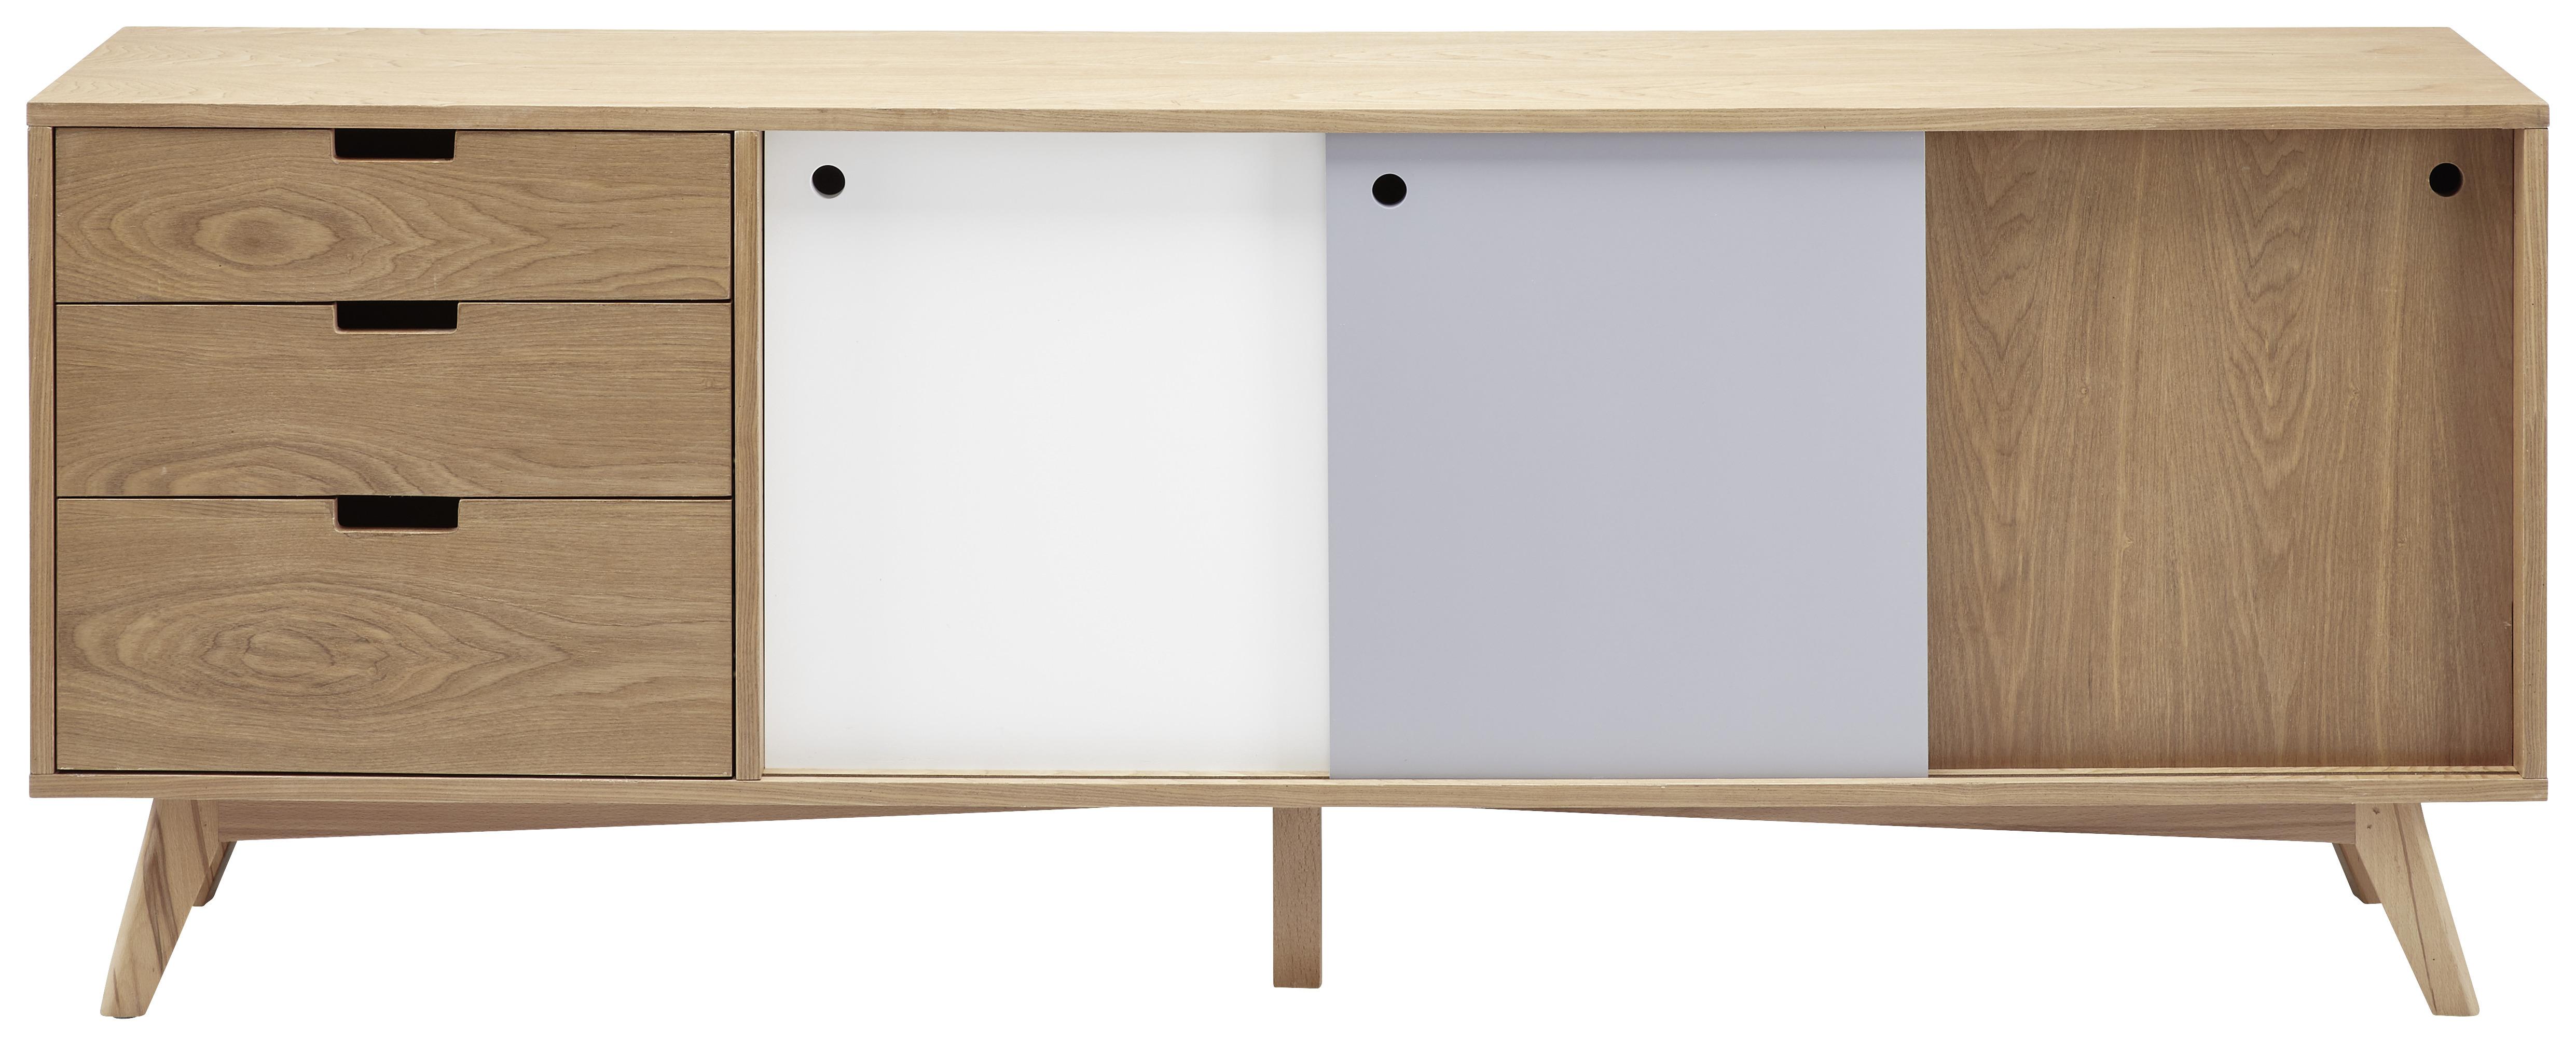 Komoda Jillian - šedá/bílá, Moderní, dřevo (160/60/35cm) - Modern Living